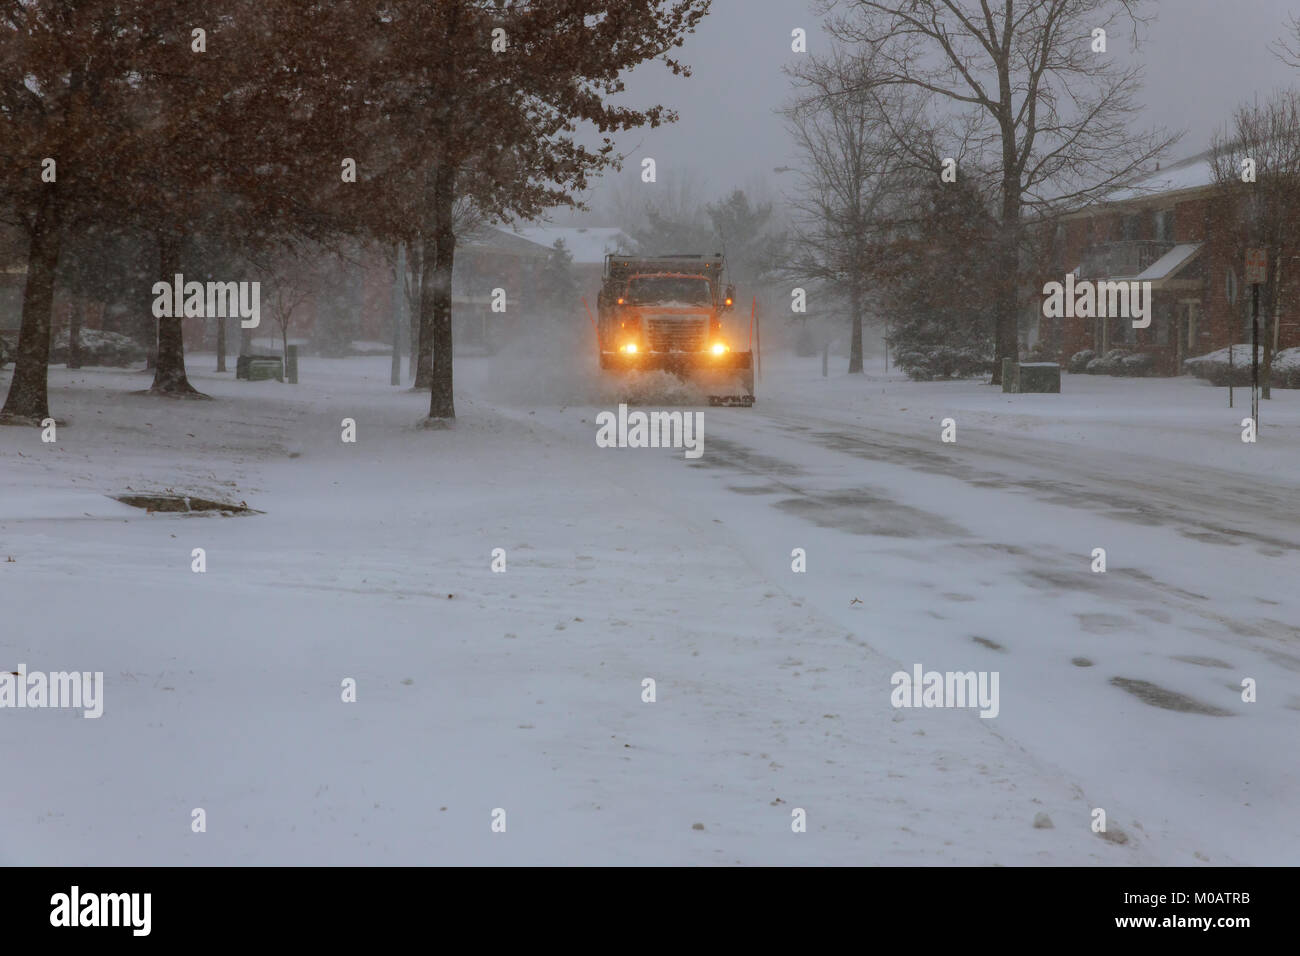 Schneepflug, Schnee entfernen Traktor Stockfotografie - Alamy